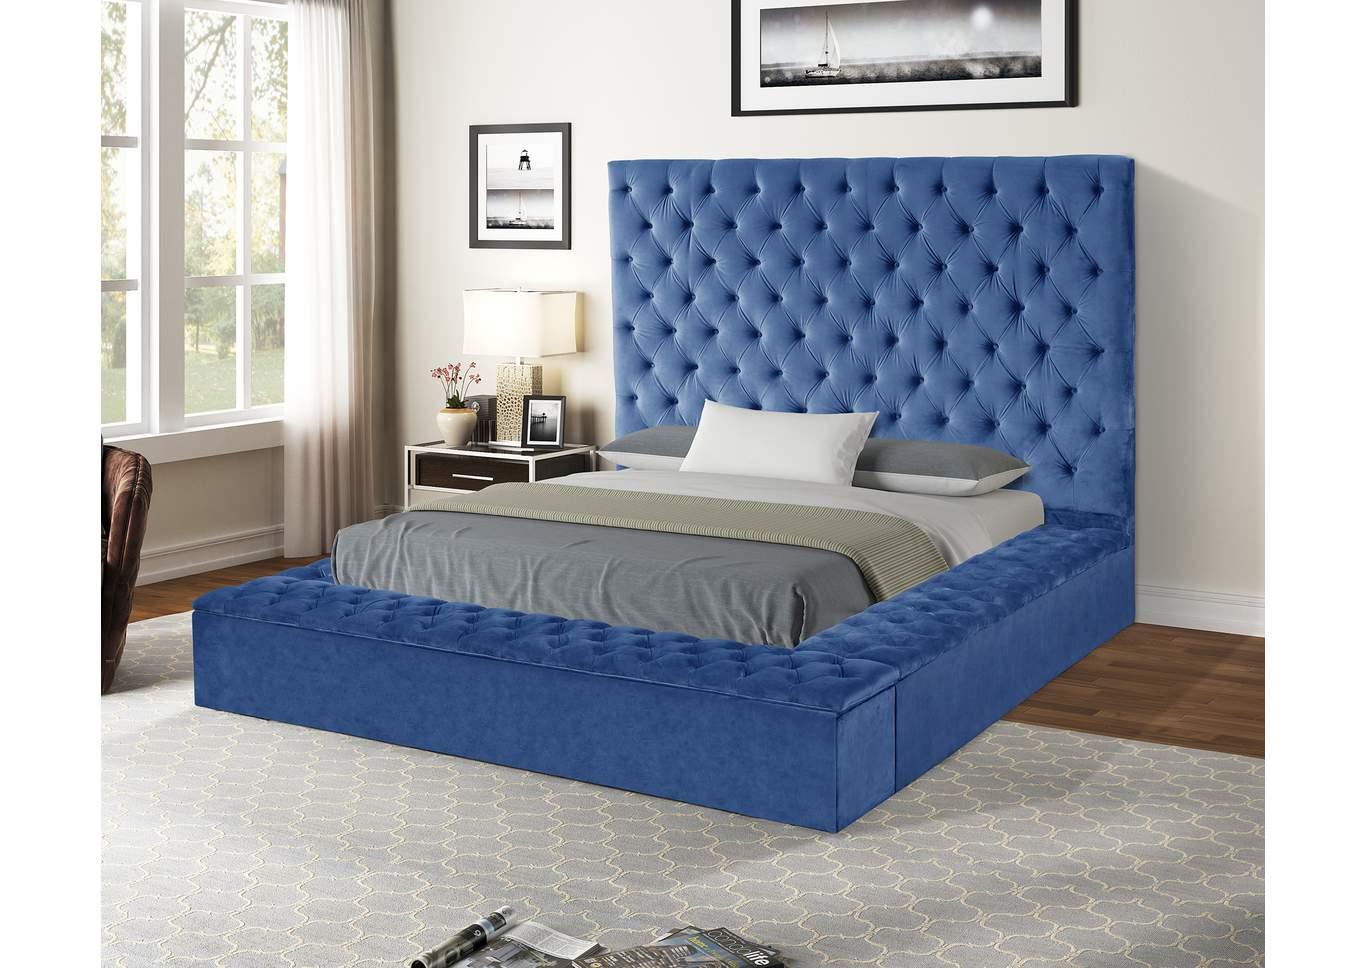 Contemporary, Modern Storage Bed NORA GHF-733569290185 in Navy blue Velvet